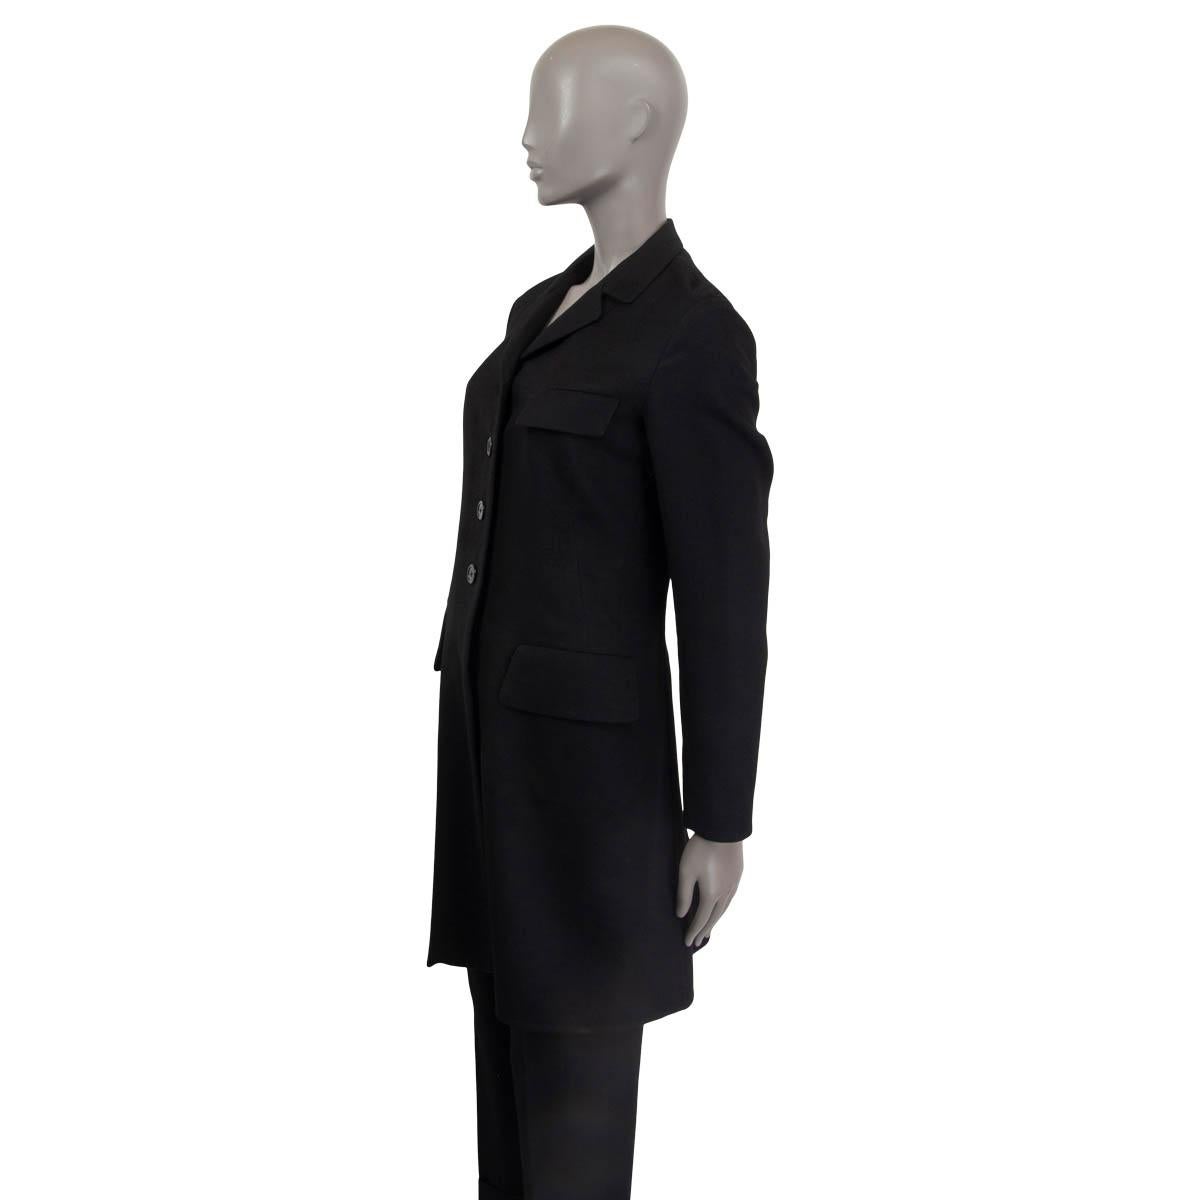 JIL SANDER black cashmere CLASSIC Coat Jacket 36 S In Excellent Condition For Sale In Zürich, CH